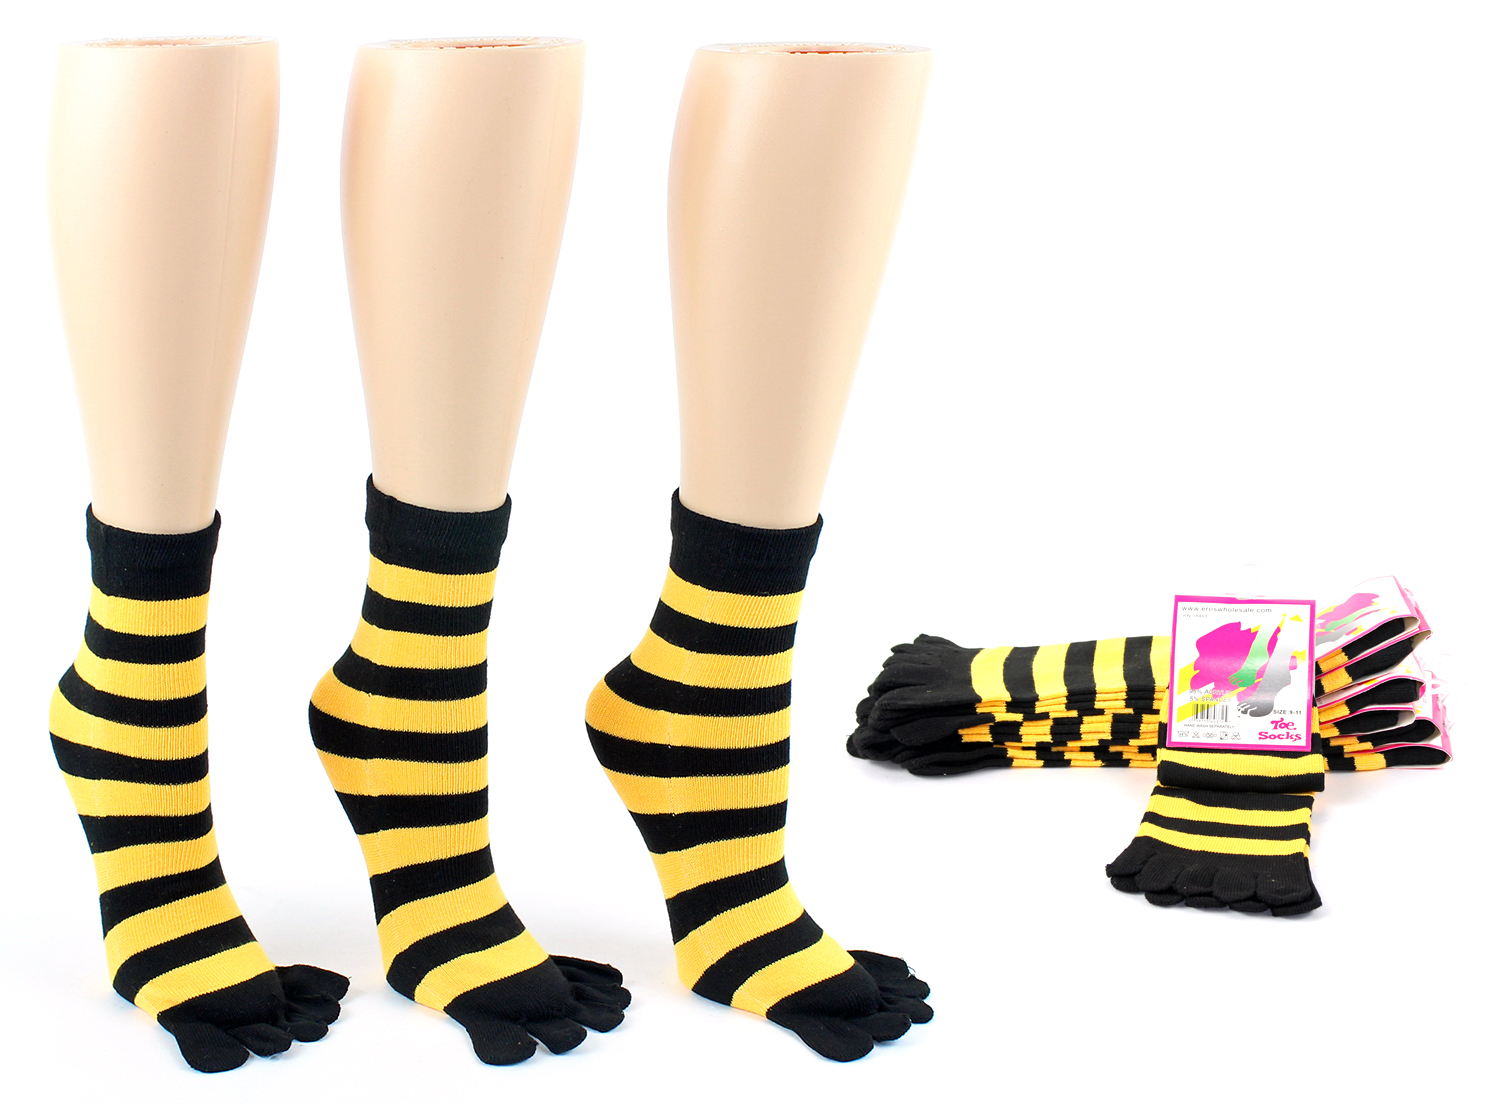 Women's Toe Socks - Black & GOLD Striped Print - Size 9-11